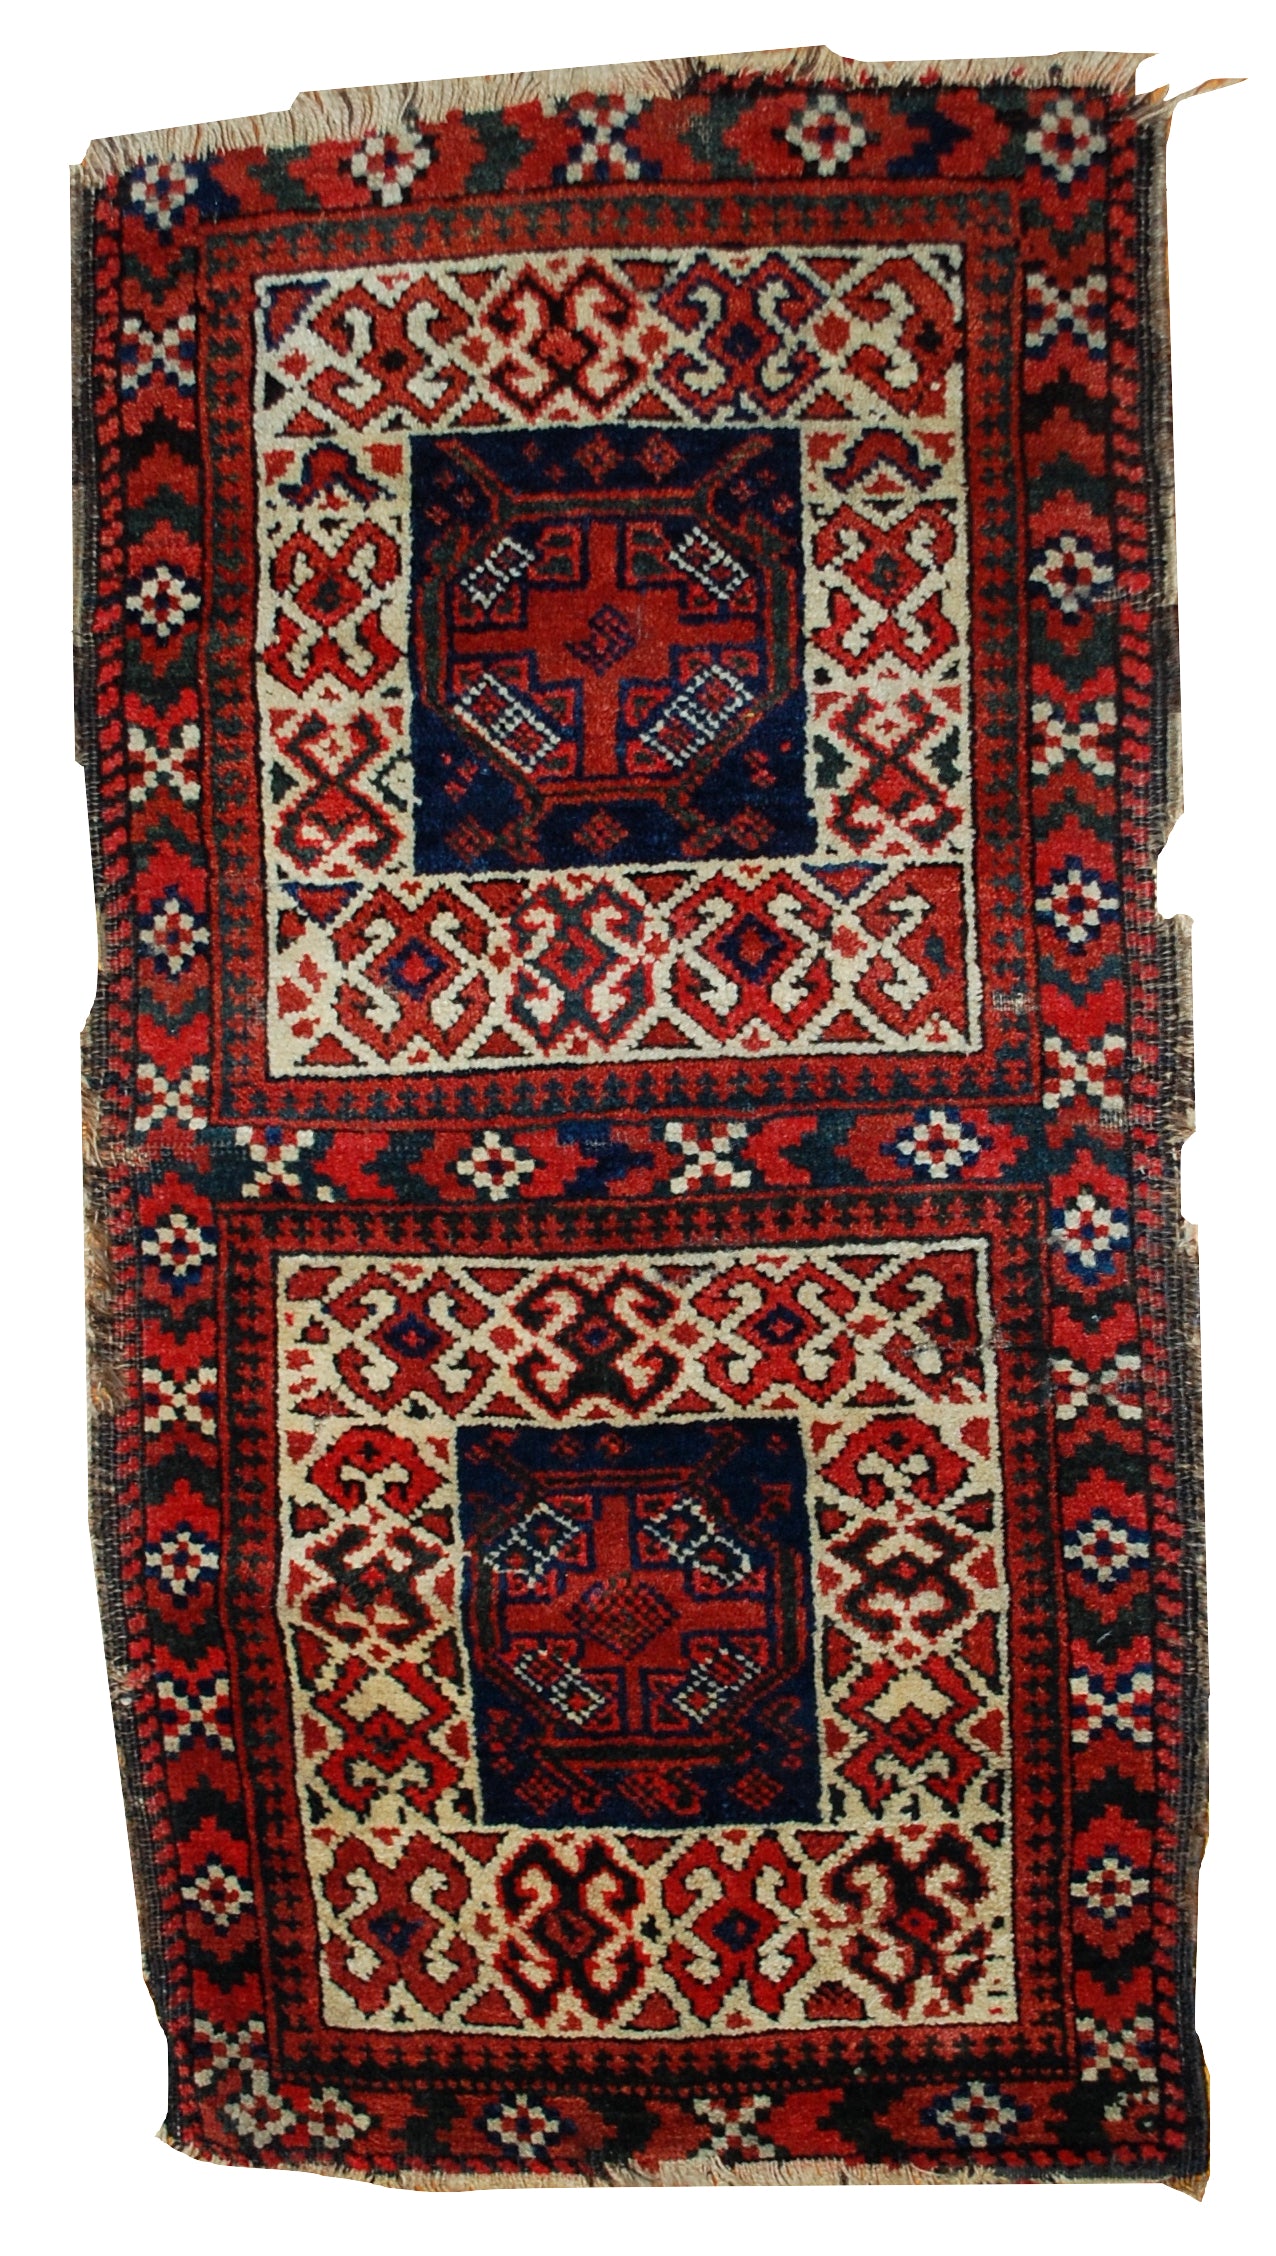 Handmade antique Afghan Baluch double bag face 1880s